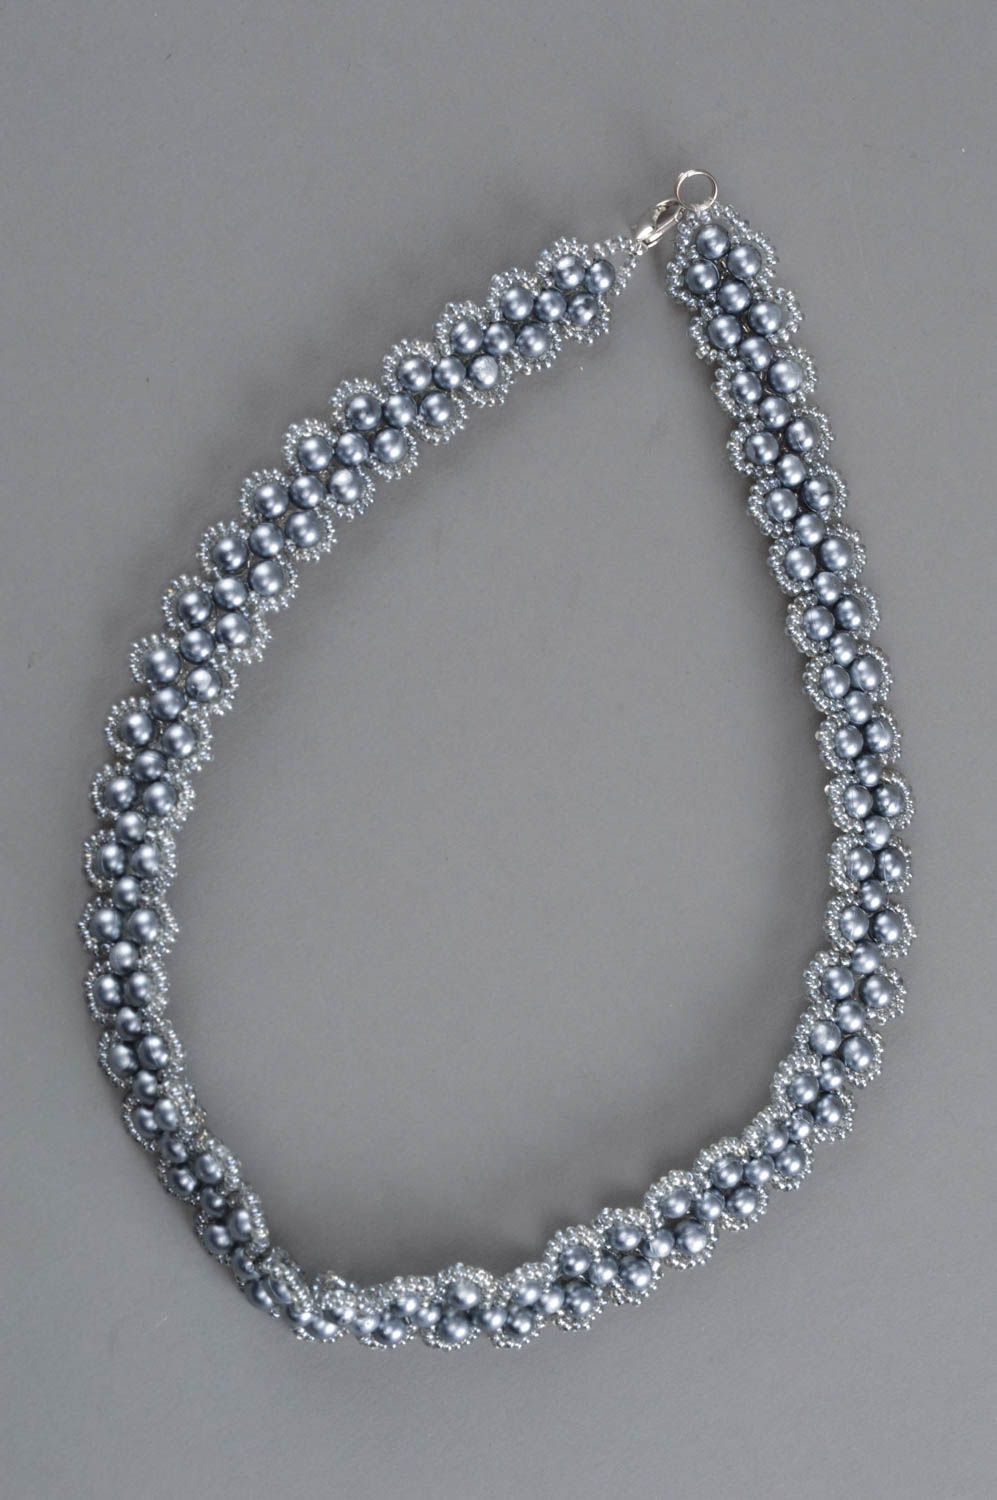 Handmade necklace made of beads elegant accessory stylish seed jewelry photo 1